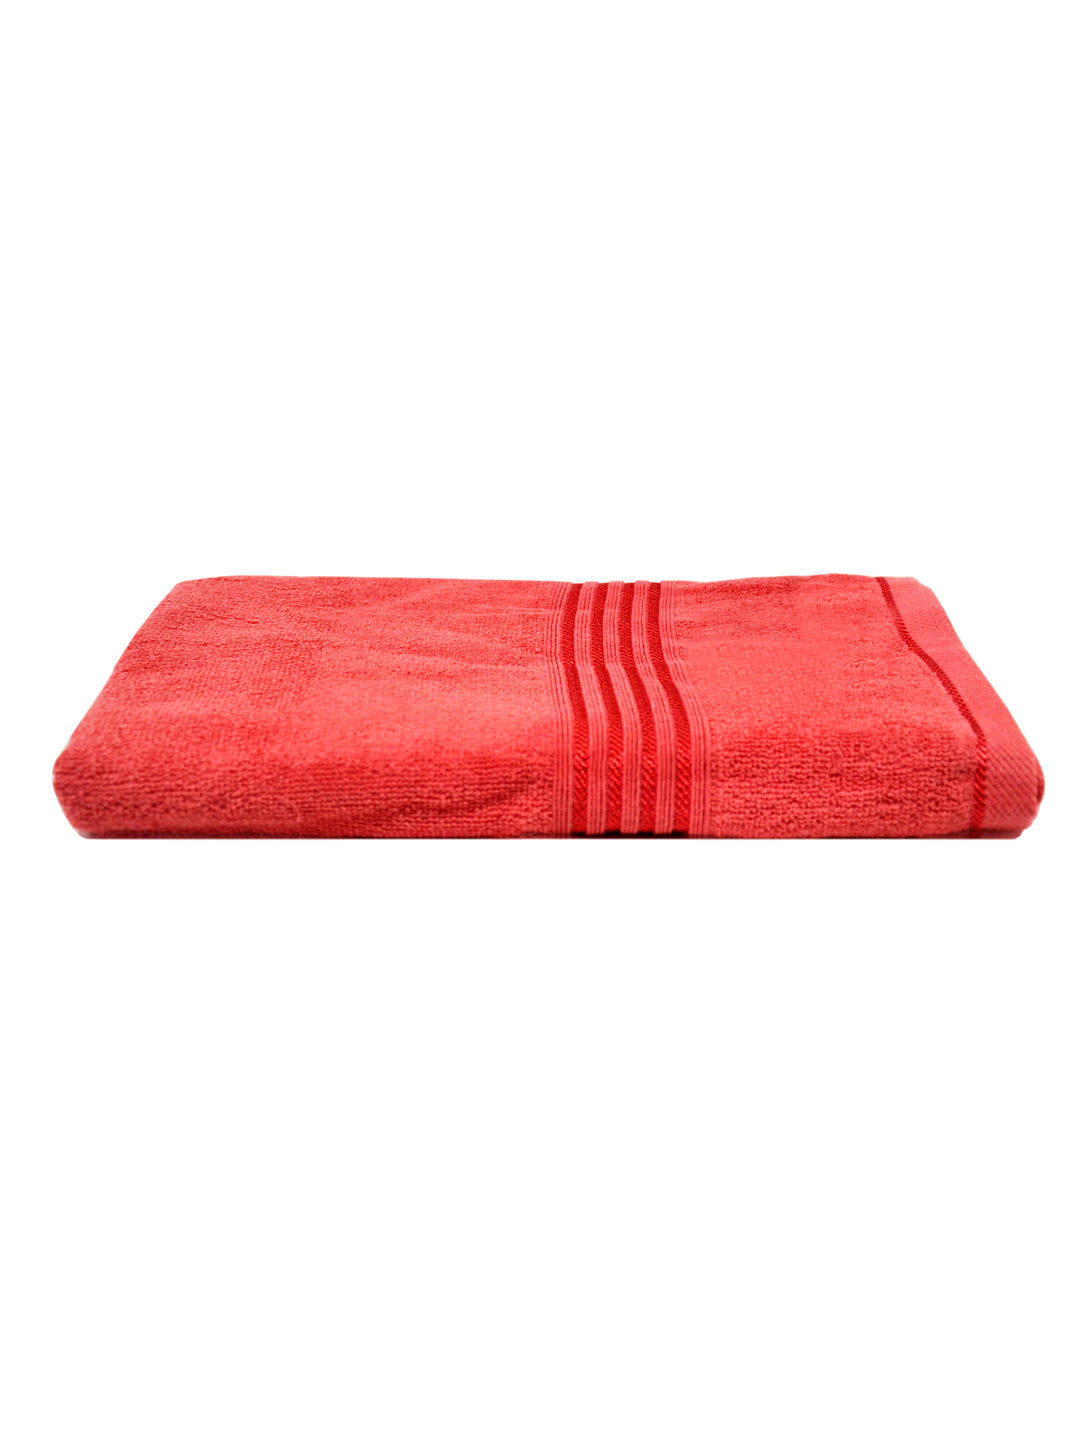 100% Cotton Premium Extra Soft Quick Dry Bath Towel- Red